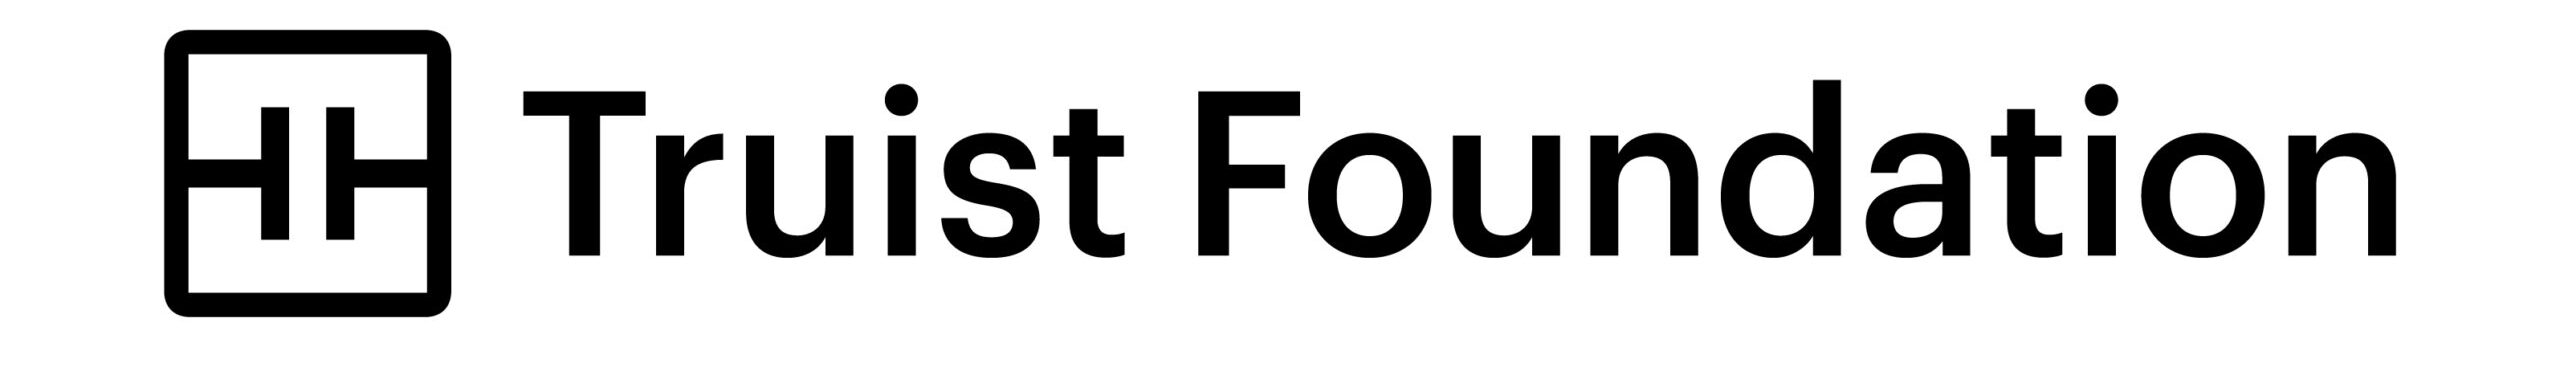 Truist Foundation logo